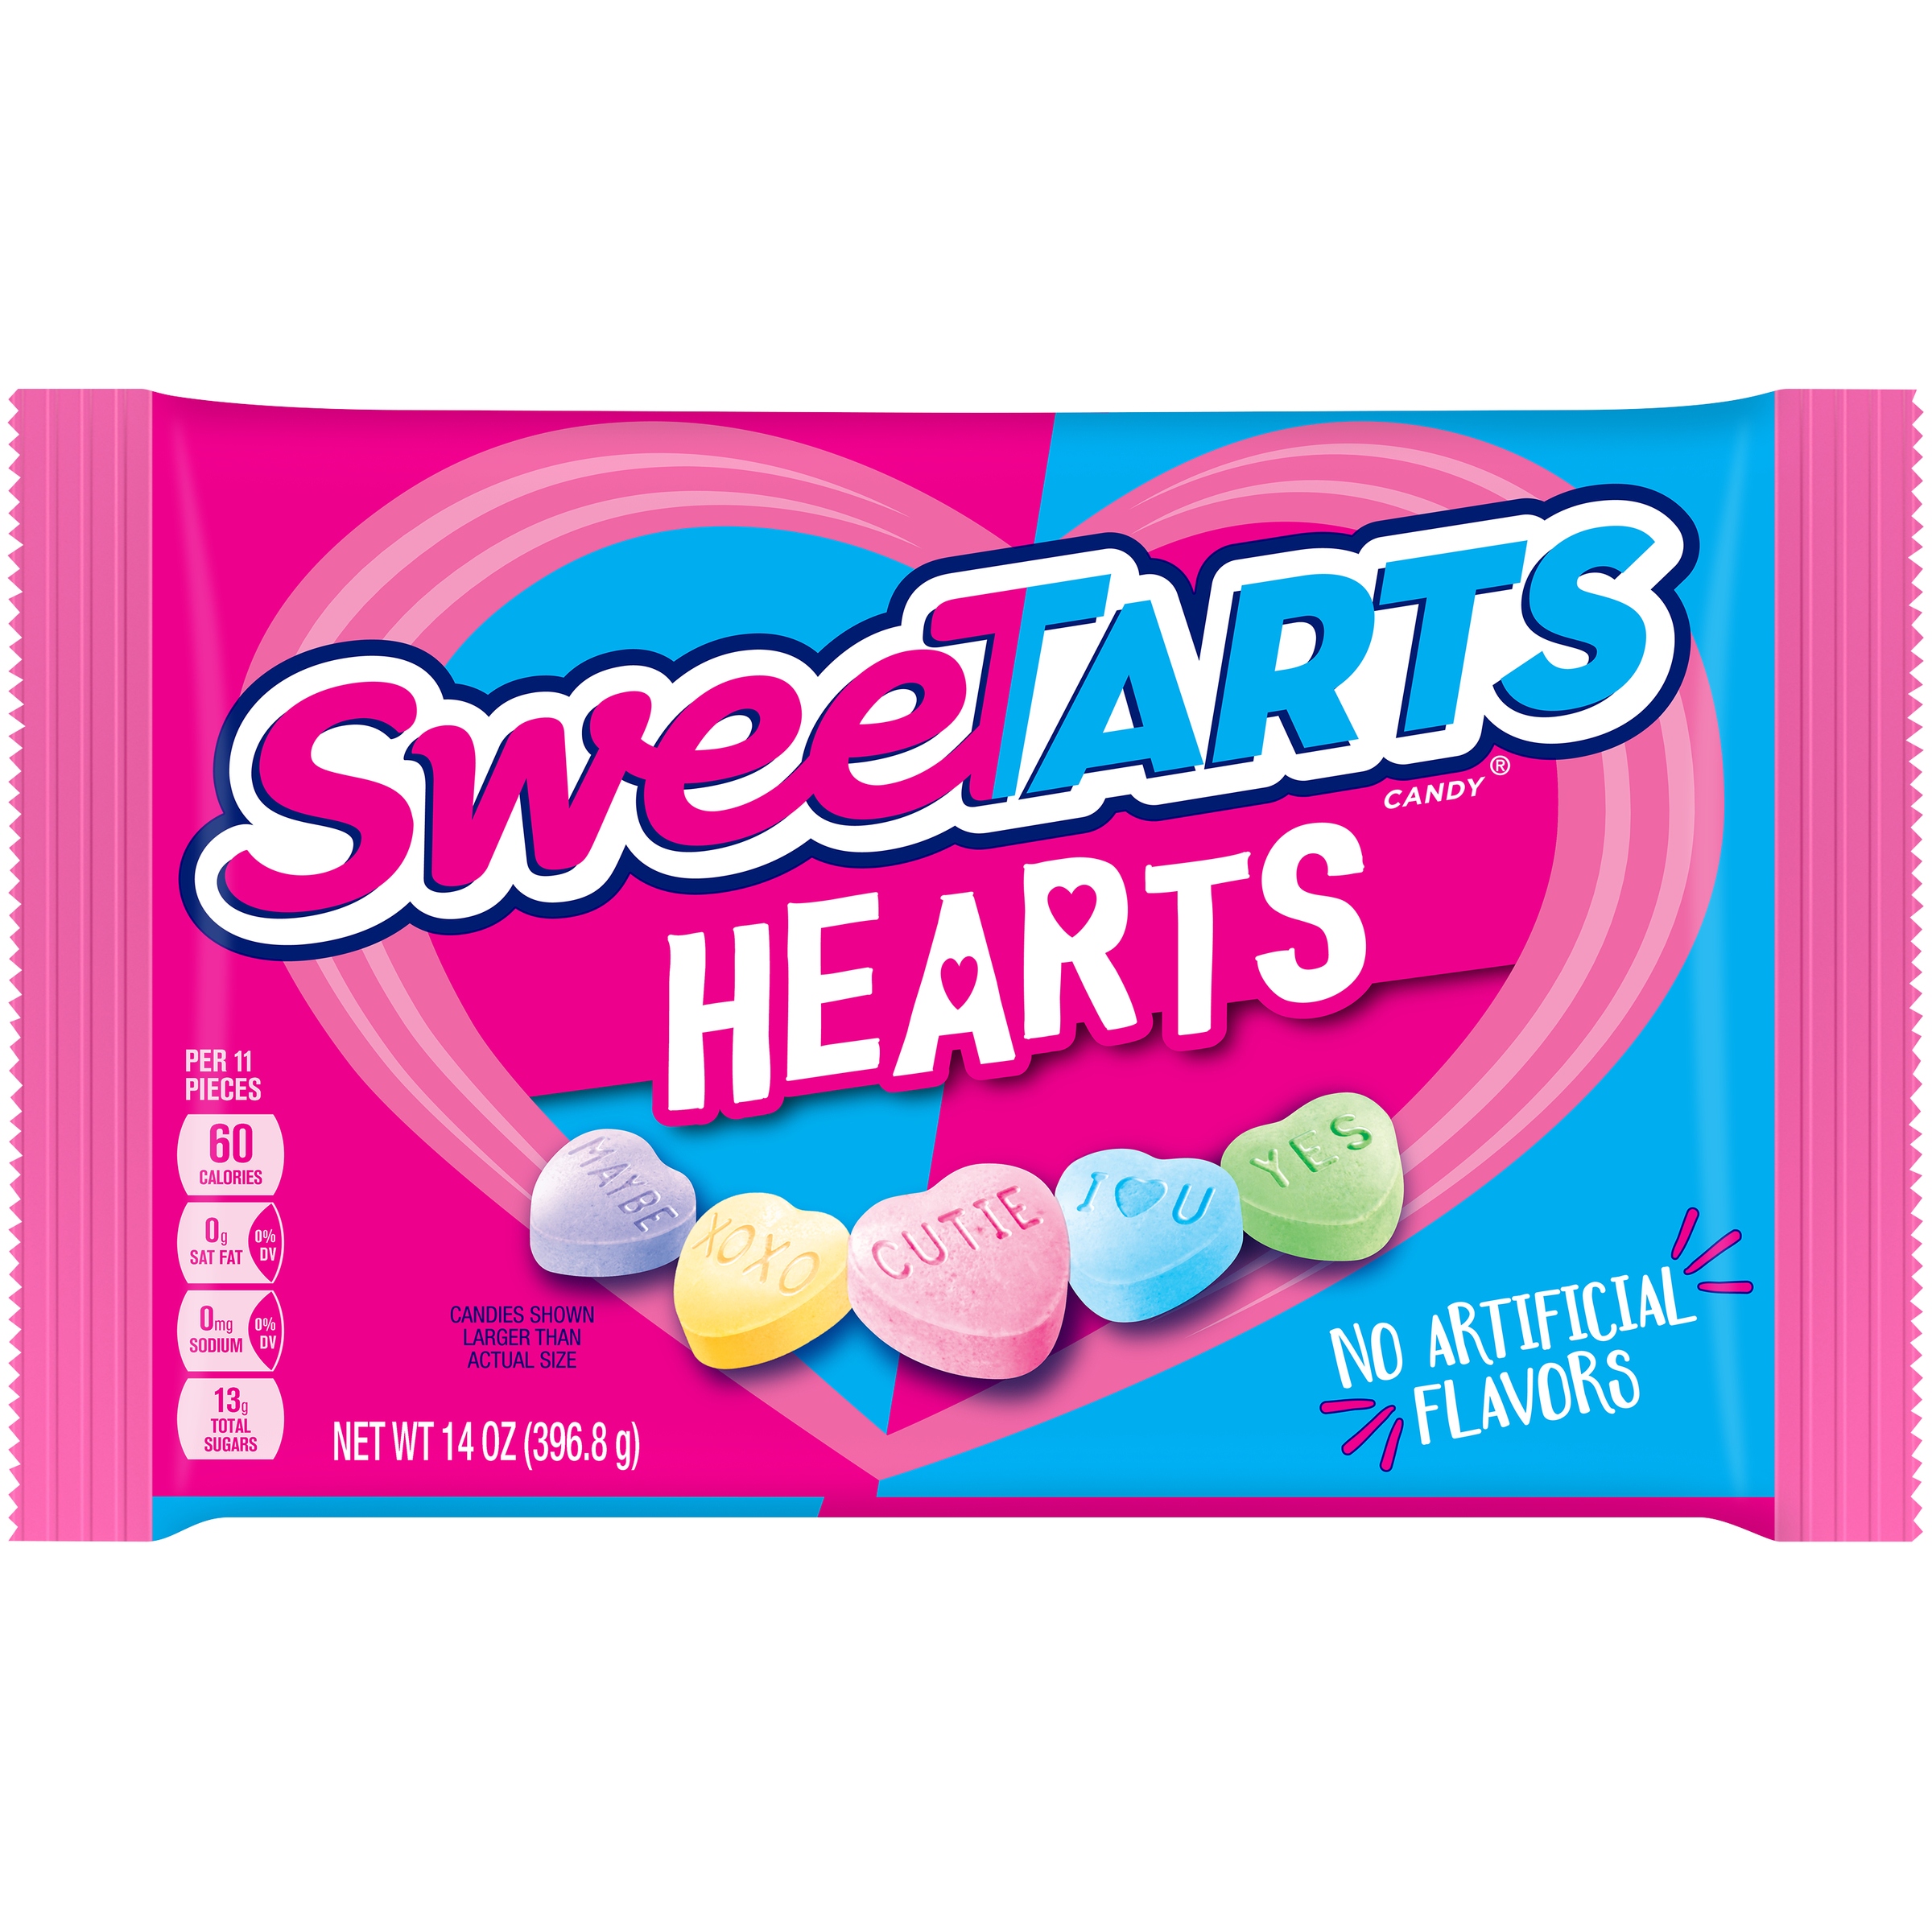 Valentine's Day Candy - Walmart.com